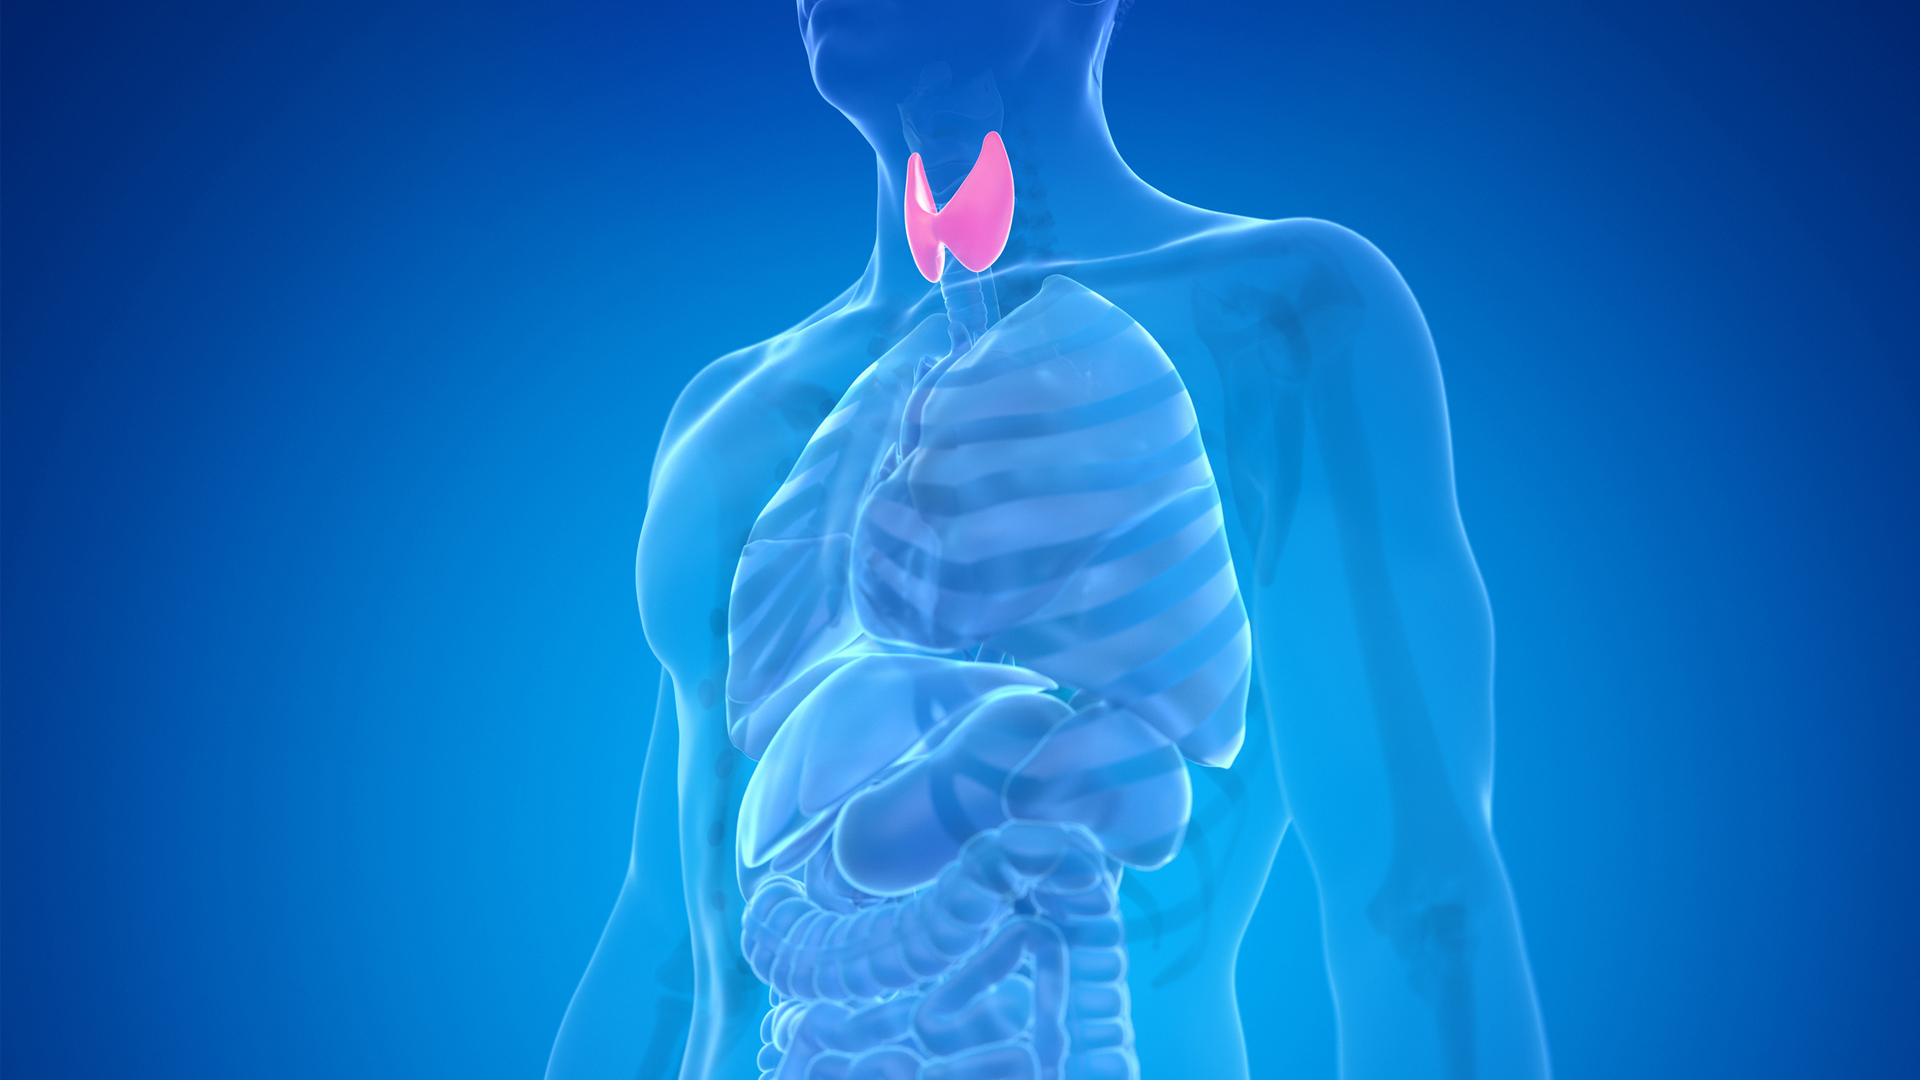 Human thyroid gland, illustration.